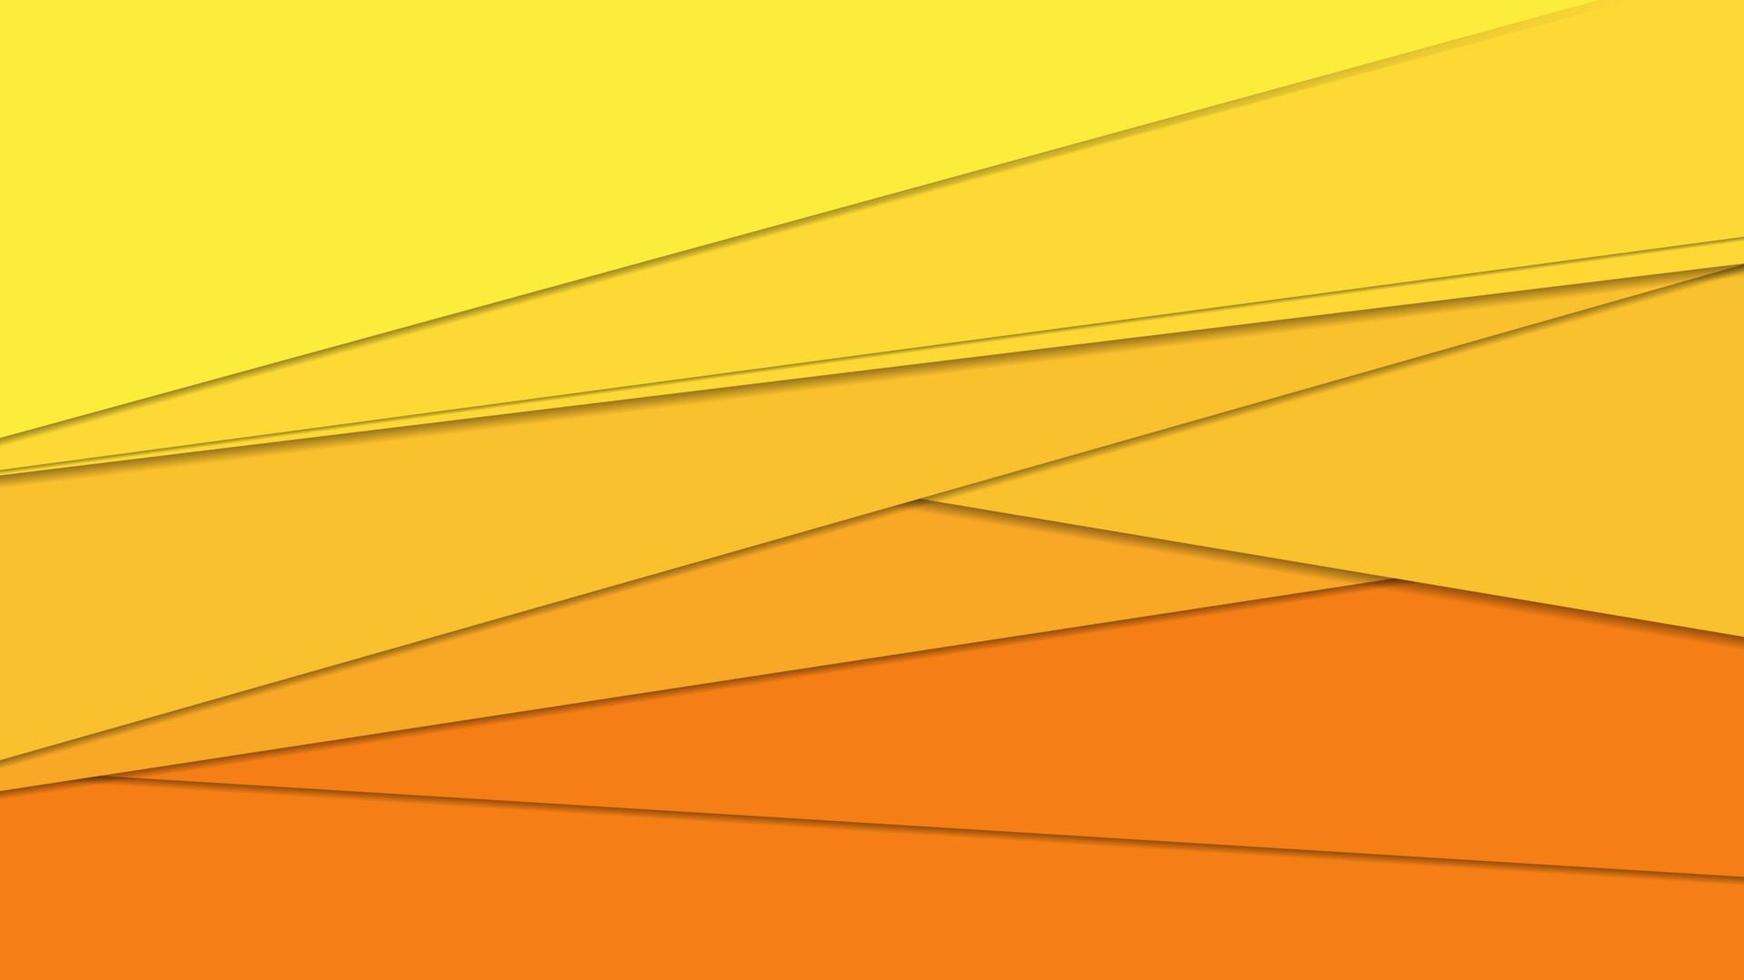 Geometric Yellow Orange Layered Abstract Background vector